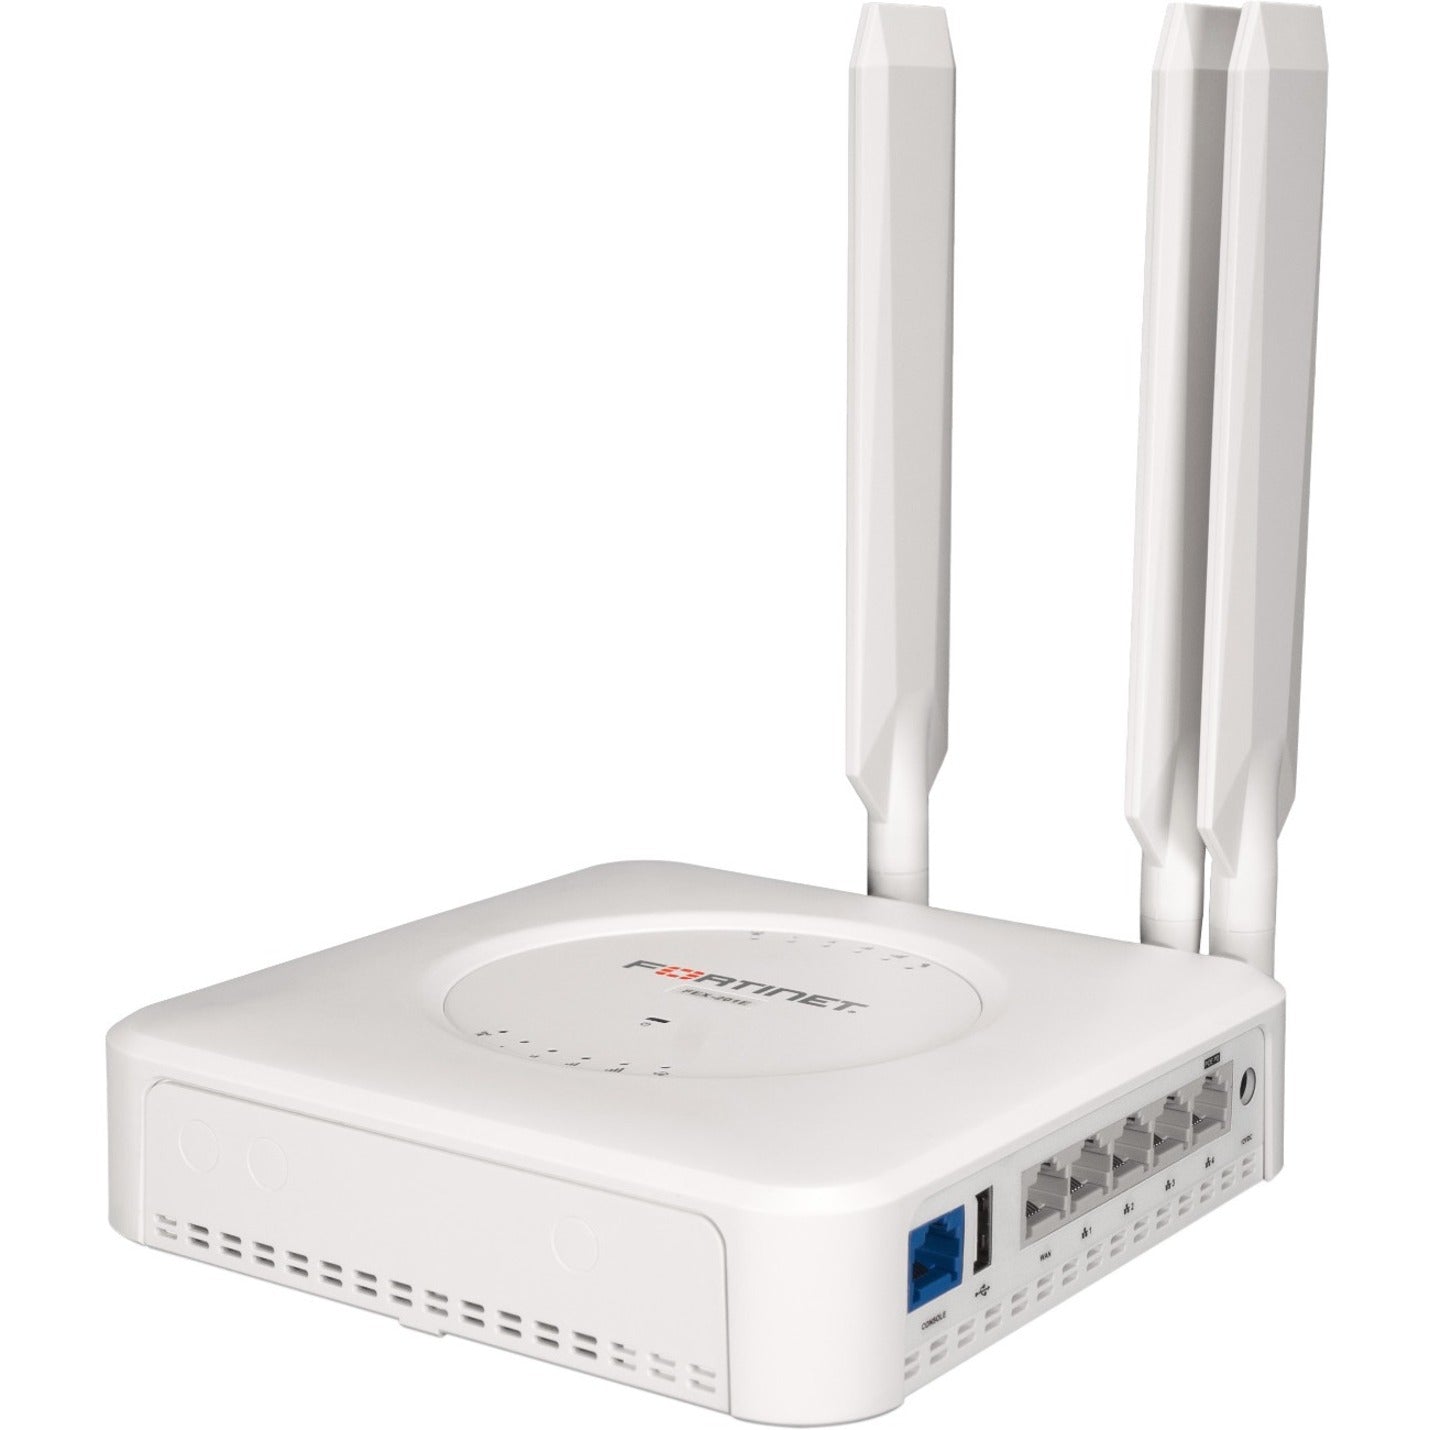 Fortinet FEX-201E FortiExtender Wireless Router, 4G LTE, Dual SIM, Gigabit Ethernet